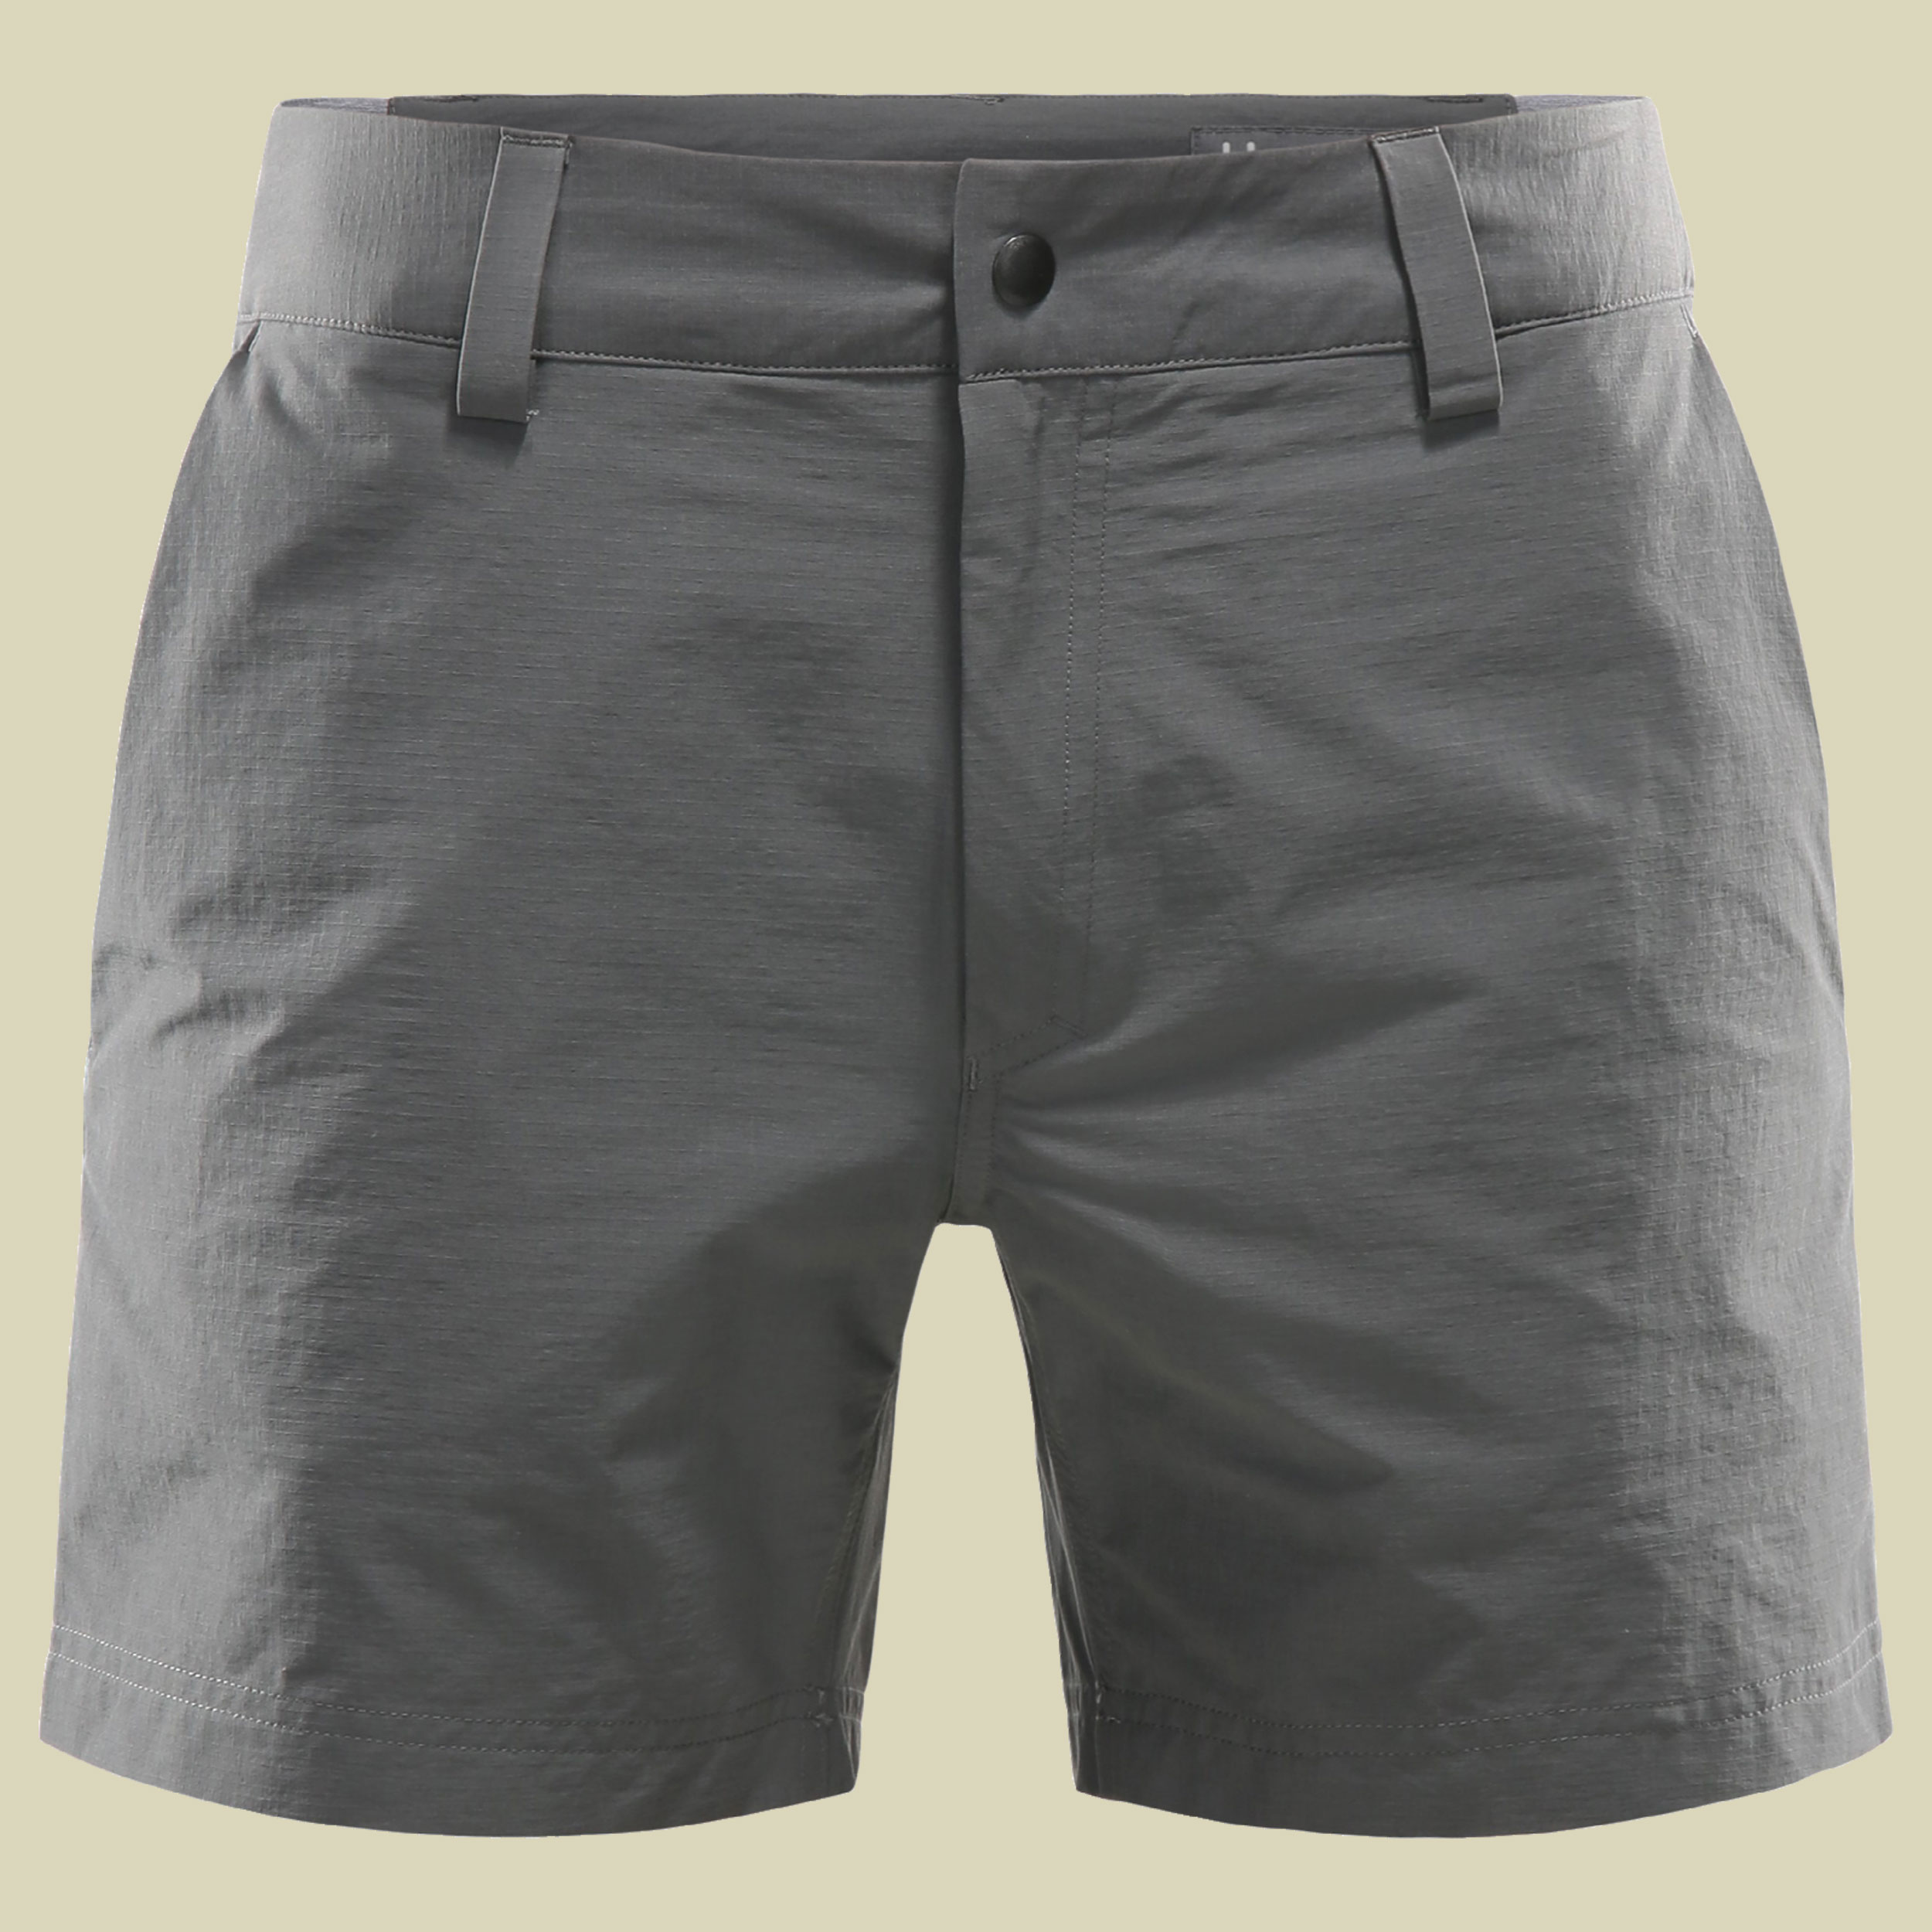 Amfibious Shorts Women  Größe 34 Farbe magnetite